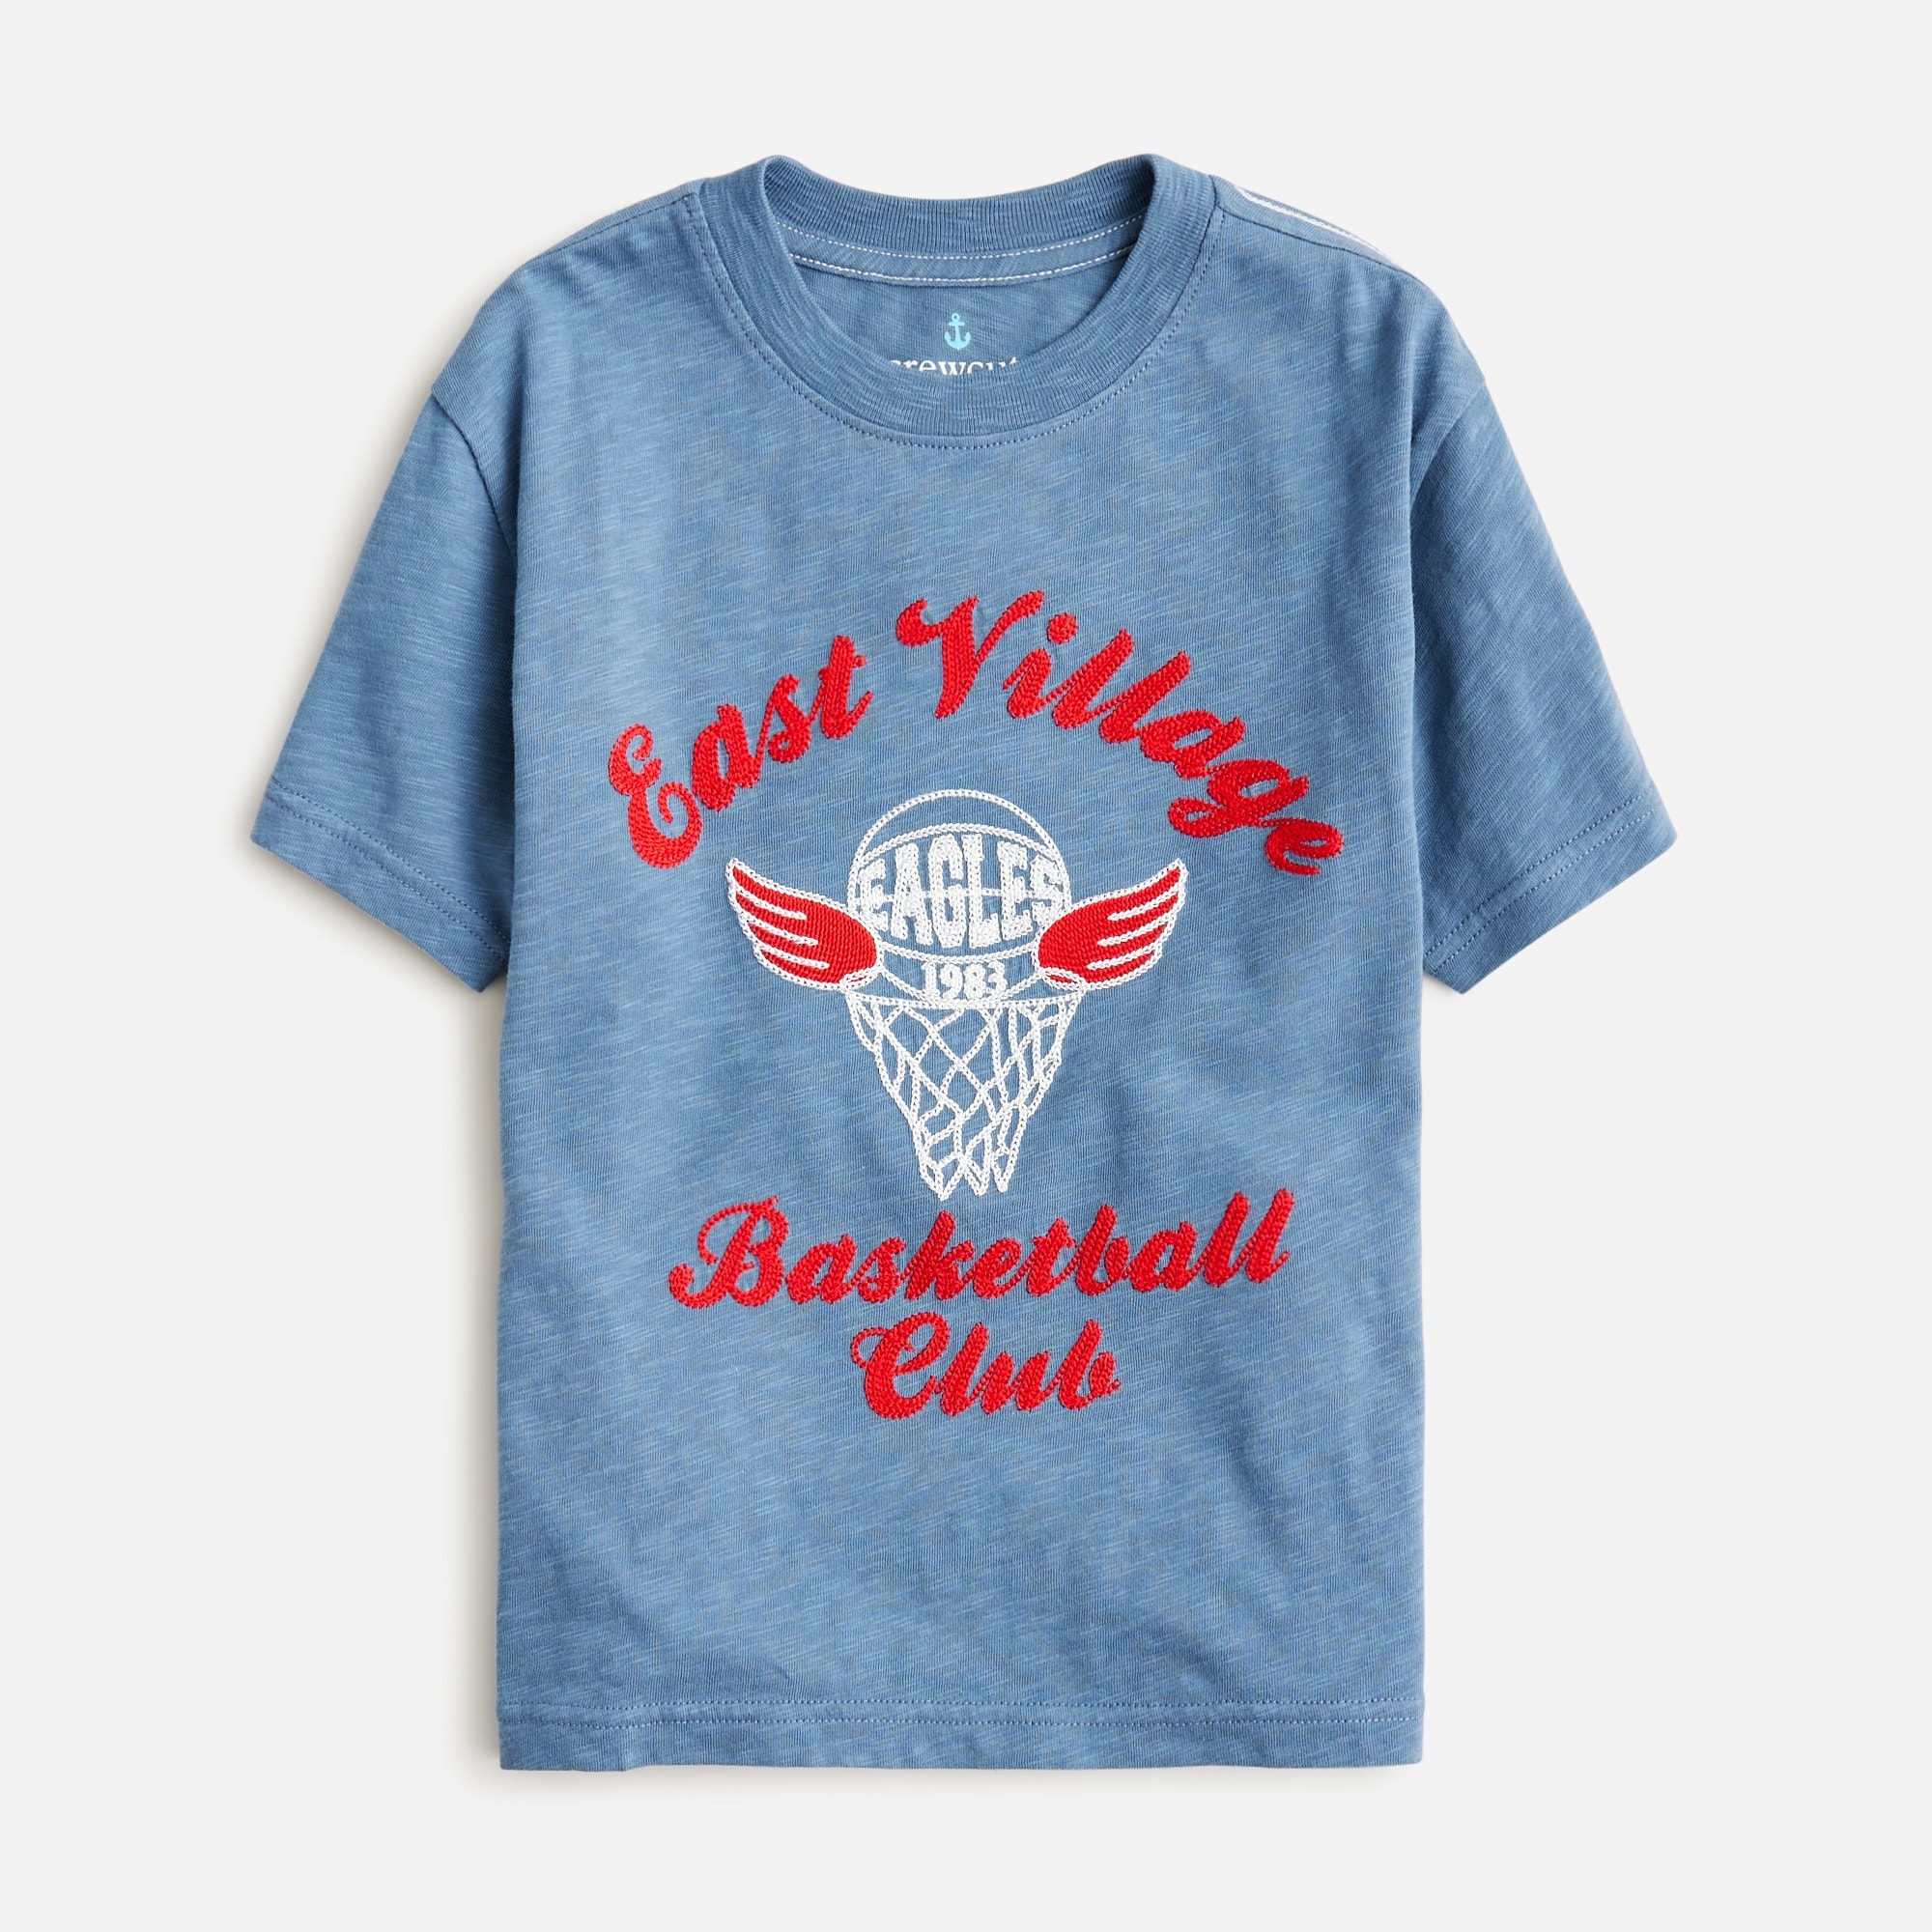 Jcrew Kids East Village basketball club graphic T-shirt